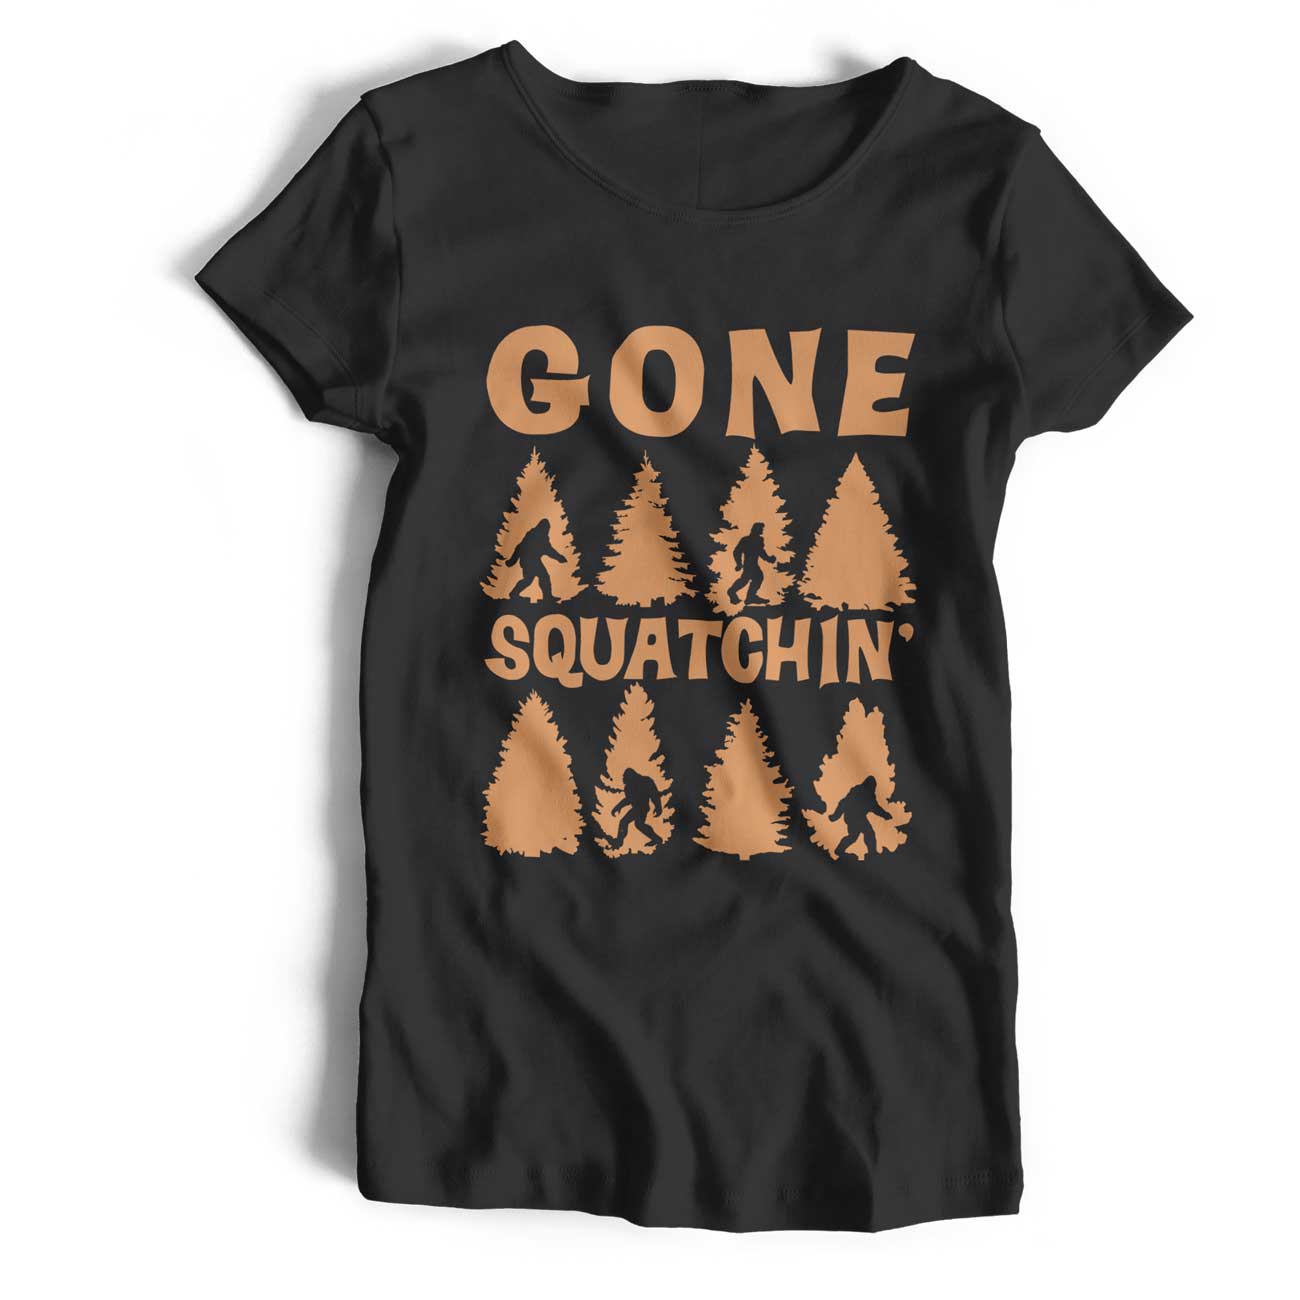 Old Skool Hooligans Bigfoot T Shirt - Gone Squatchin' Trees Sasquatch